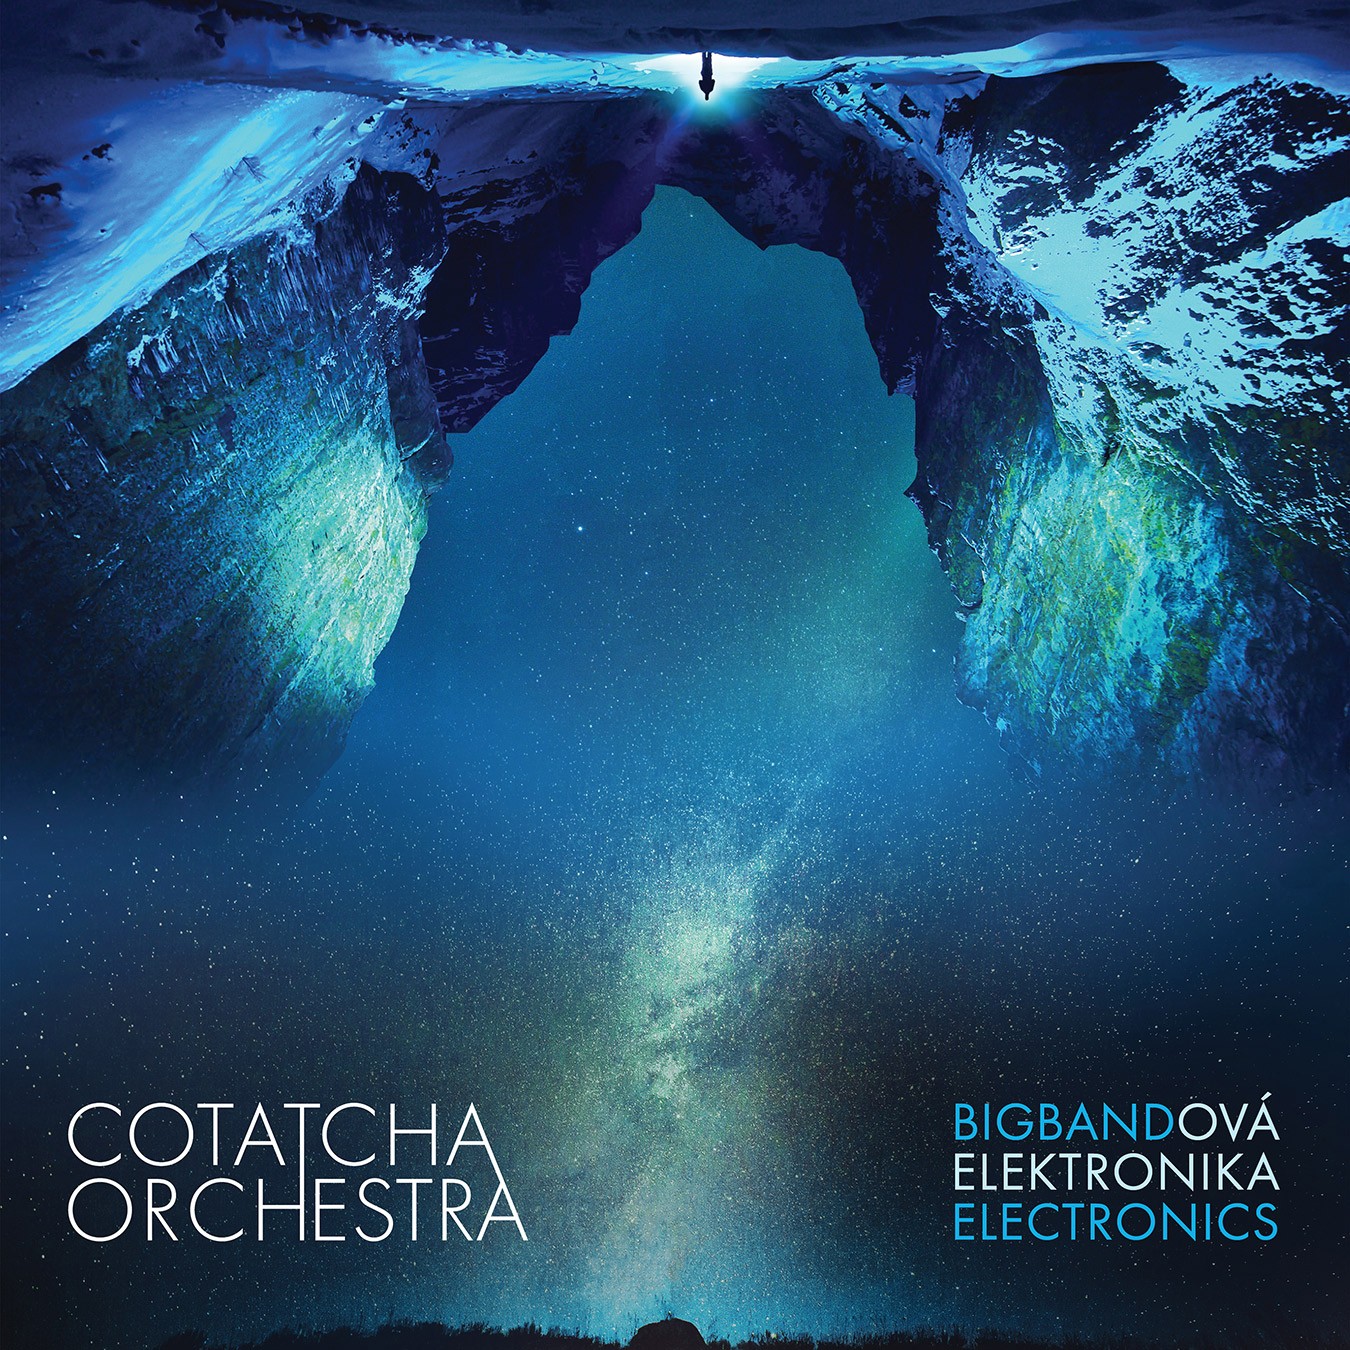 BIGBANDOVÁ ELEKTRONIKA / BIGBAND ELECTRONICS - Album Cover